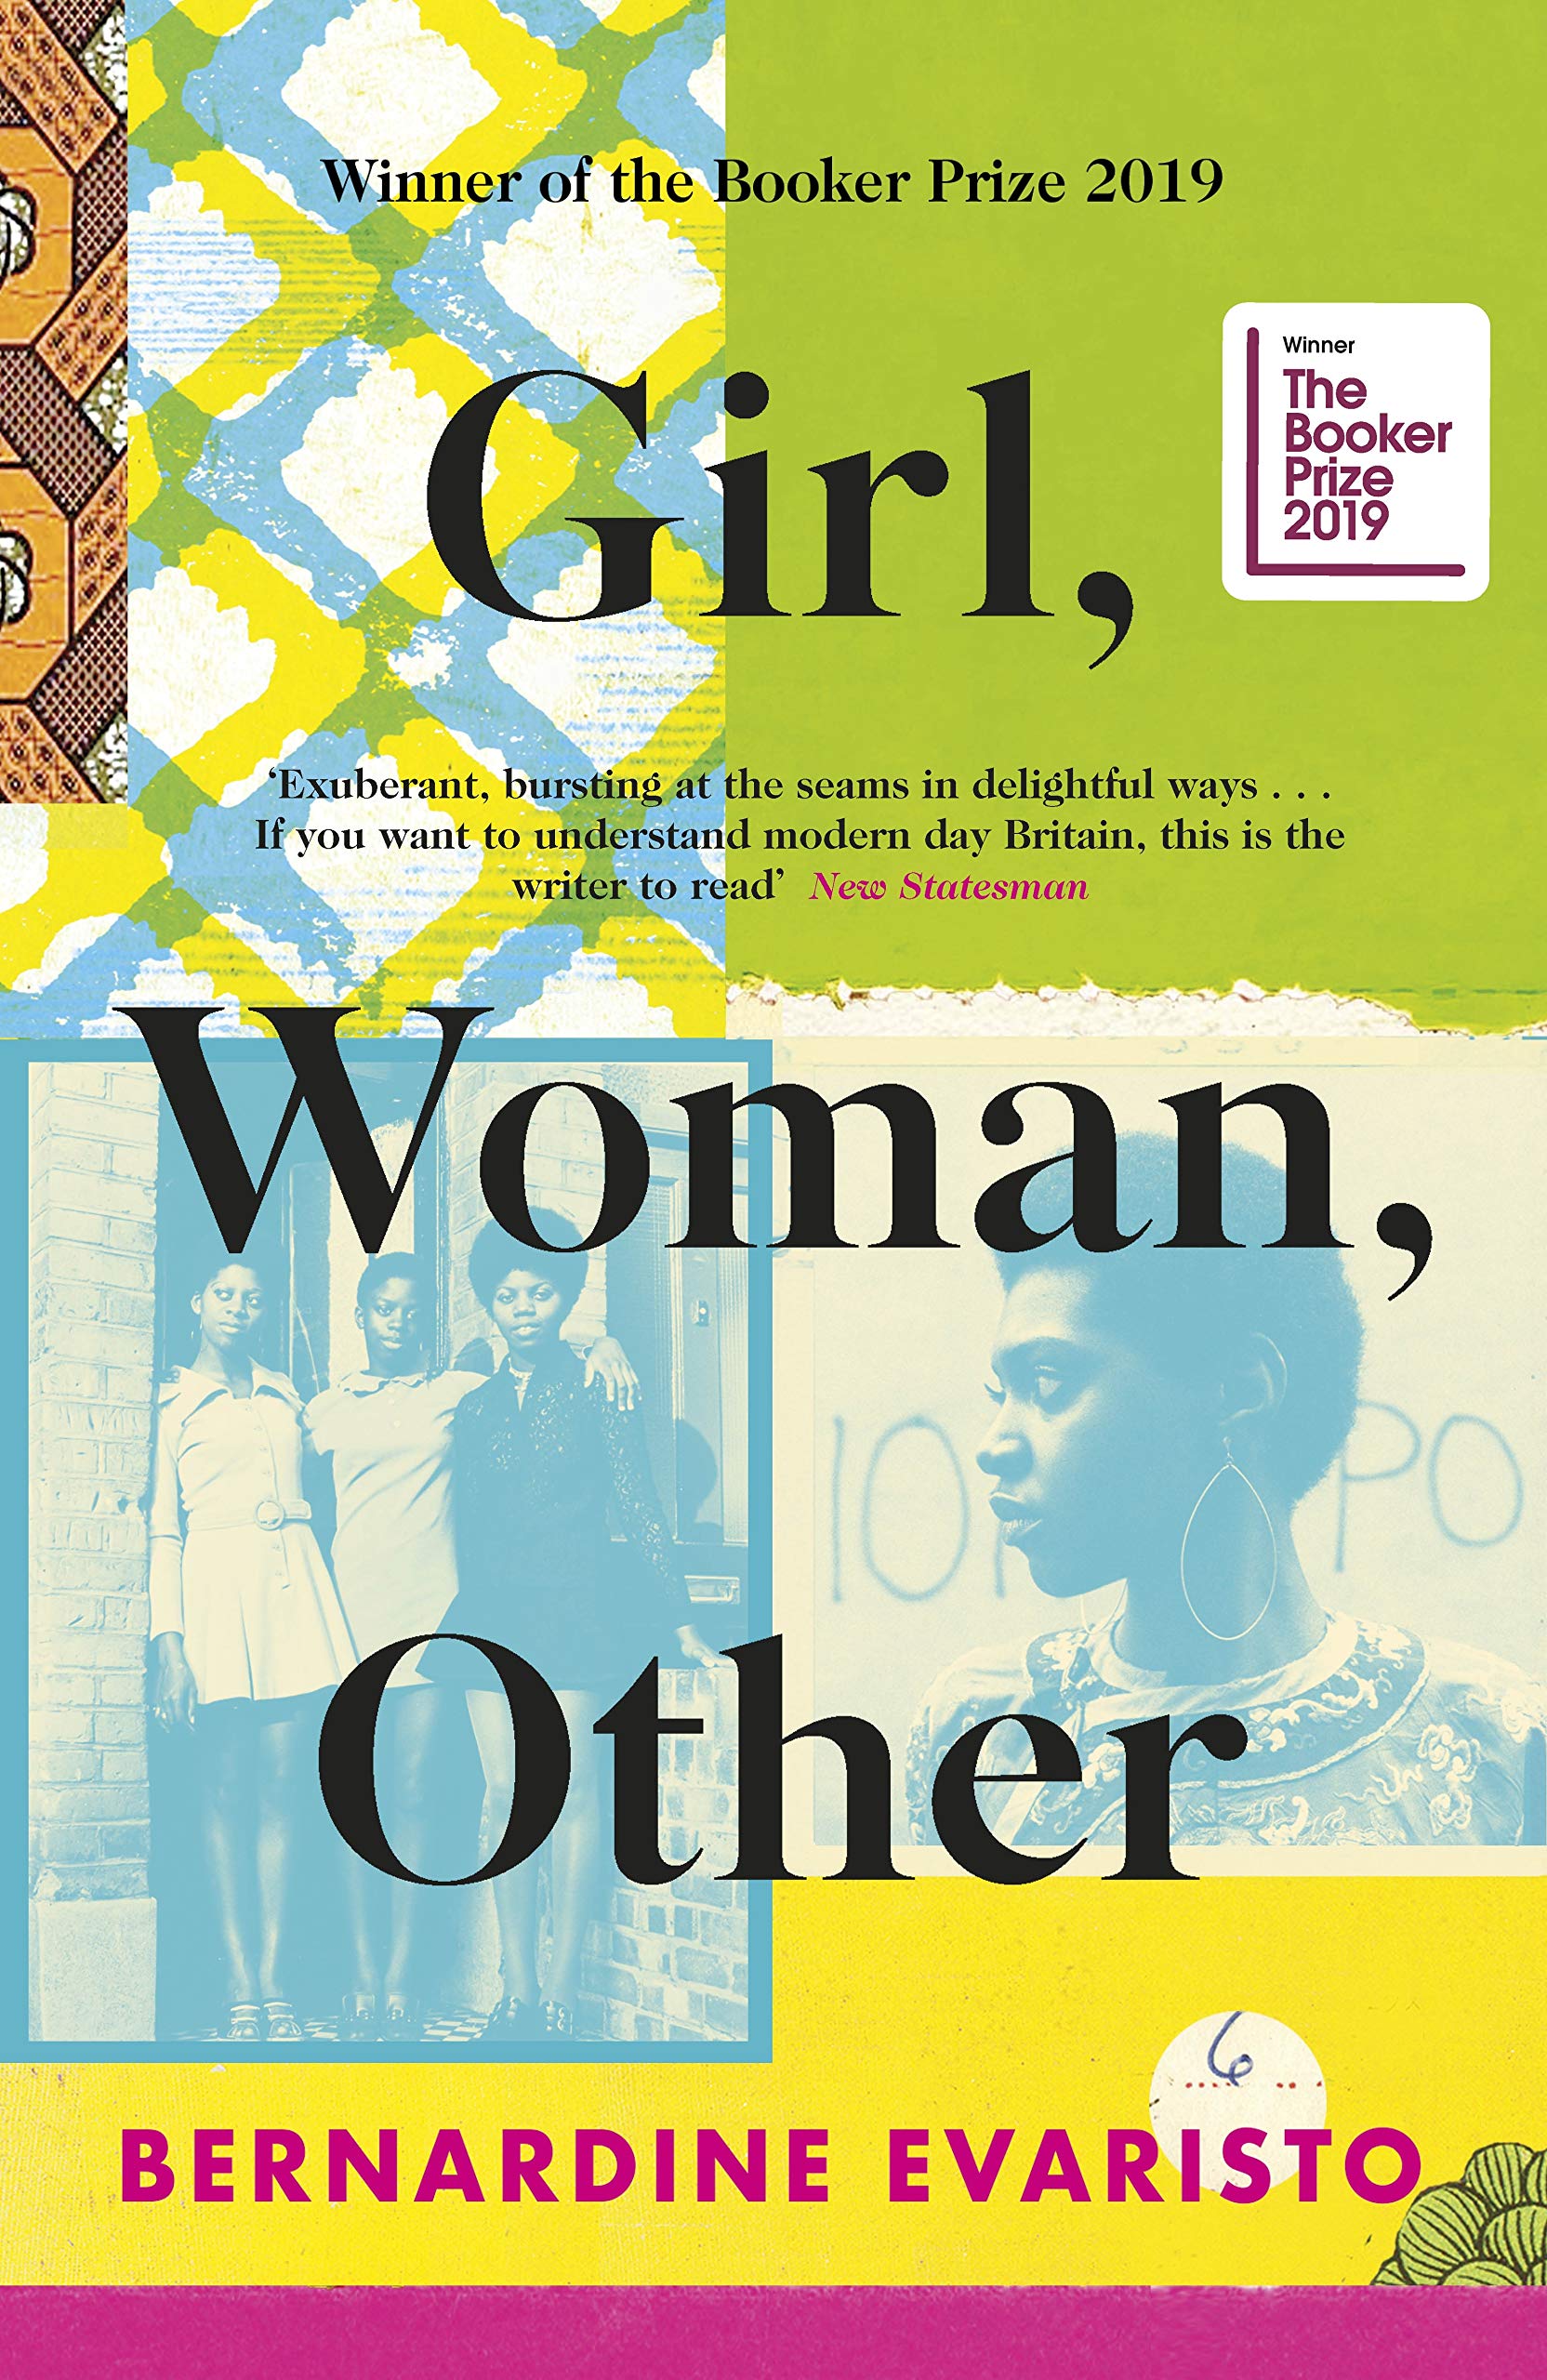 Hardcover photo of Girl, Woman, Other by Bernardine Evaristo.